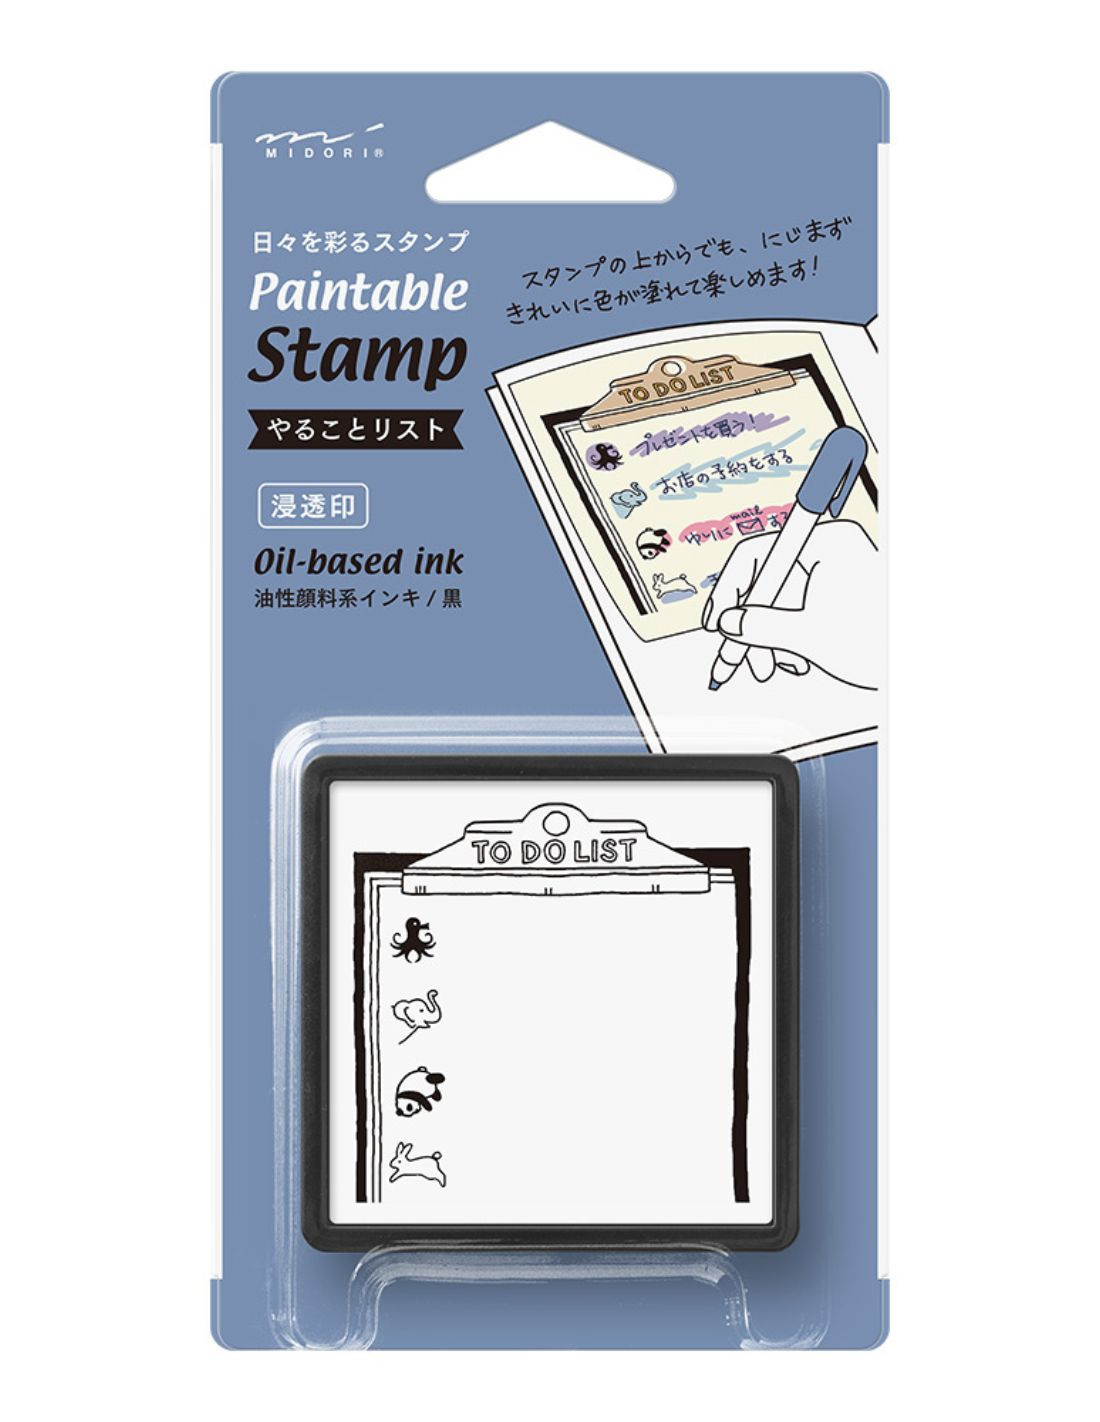 Tampon pré-encré Paintable Stamp - To-do list - Midori